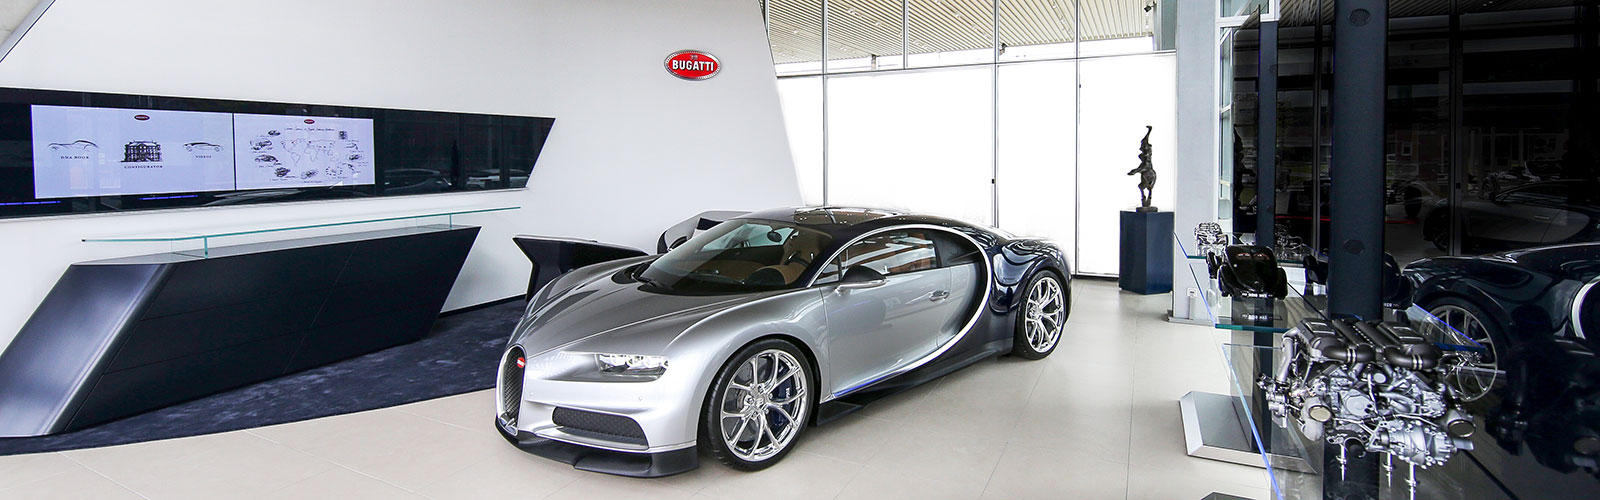 Braunwagner Spatial Interior Design Bugatti Showrooms worldwide